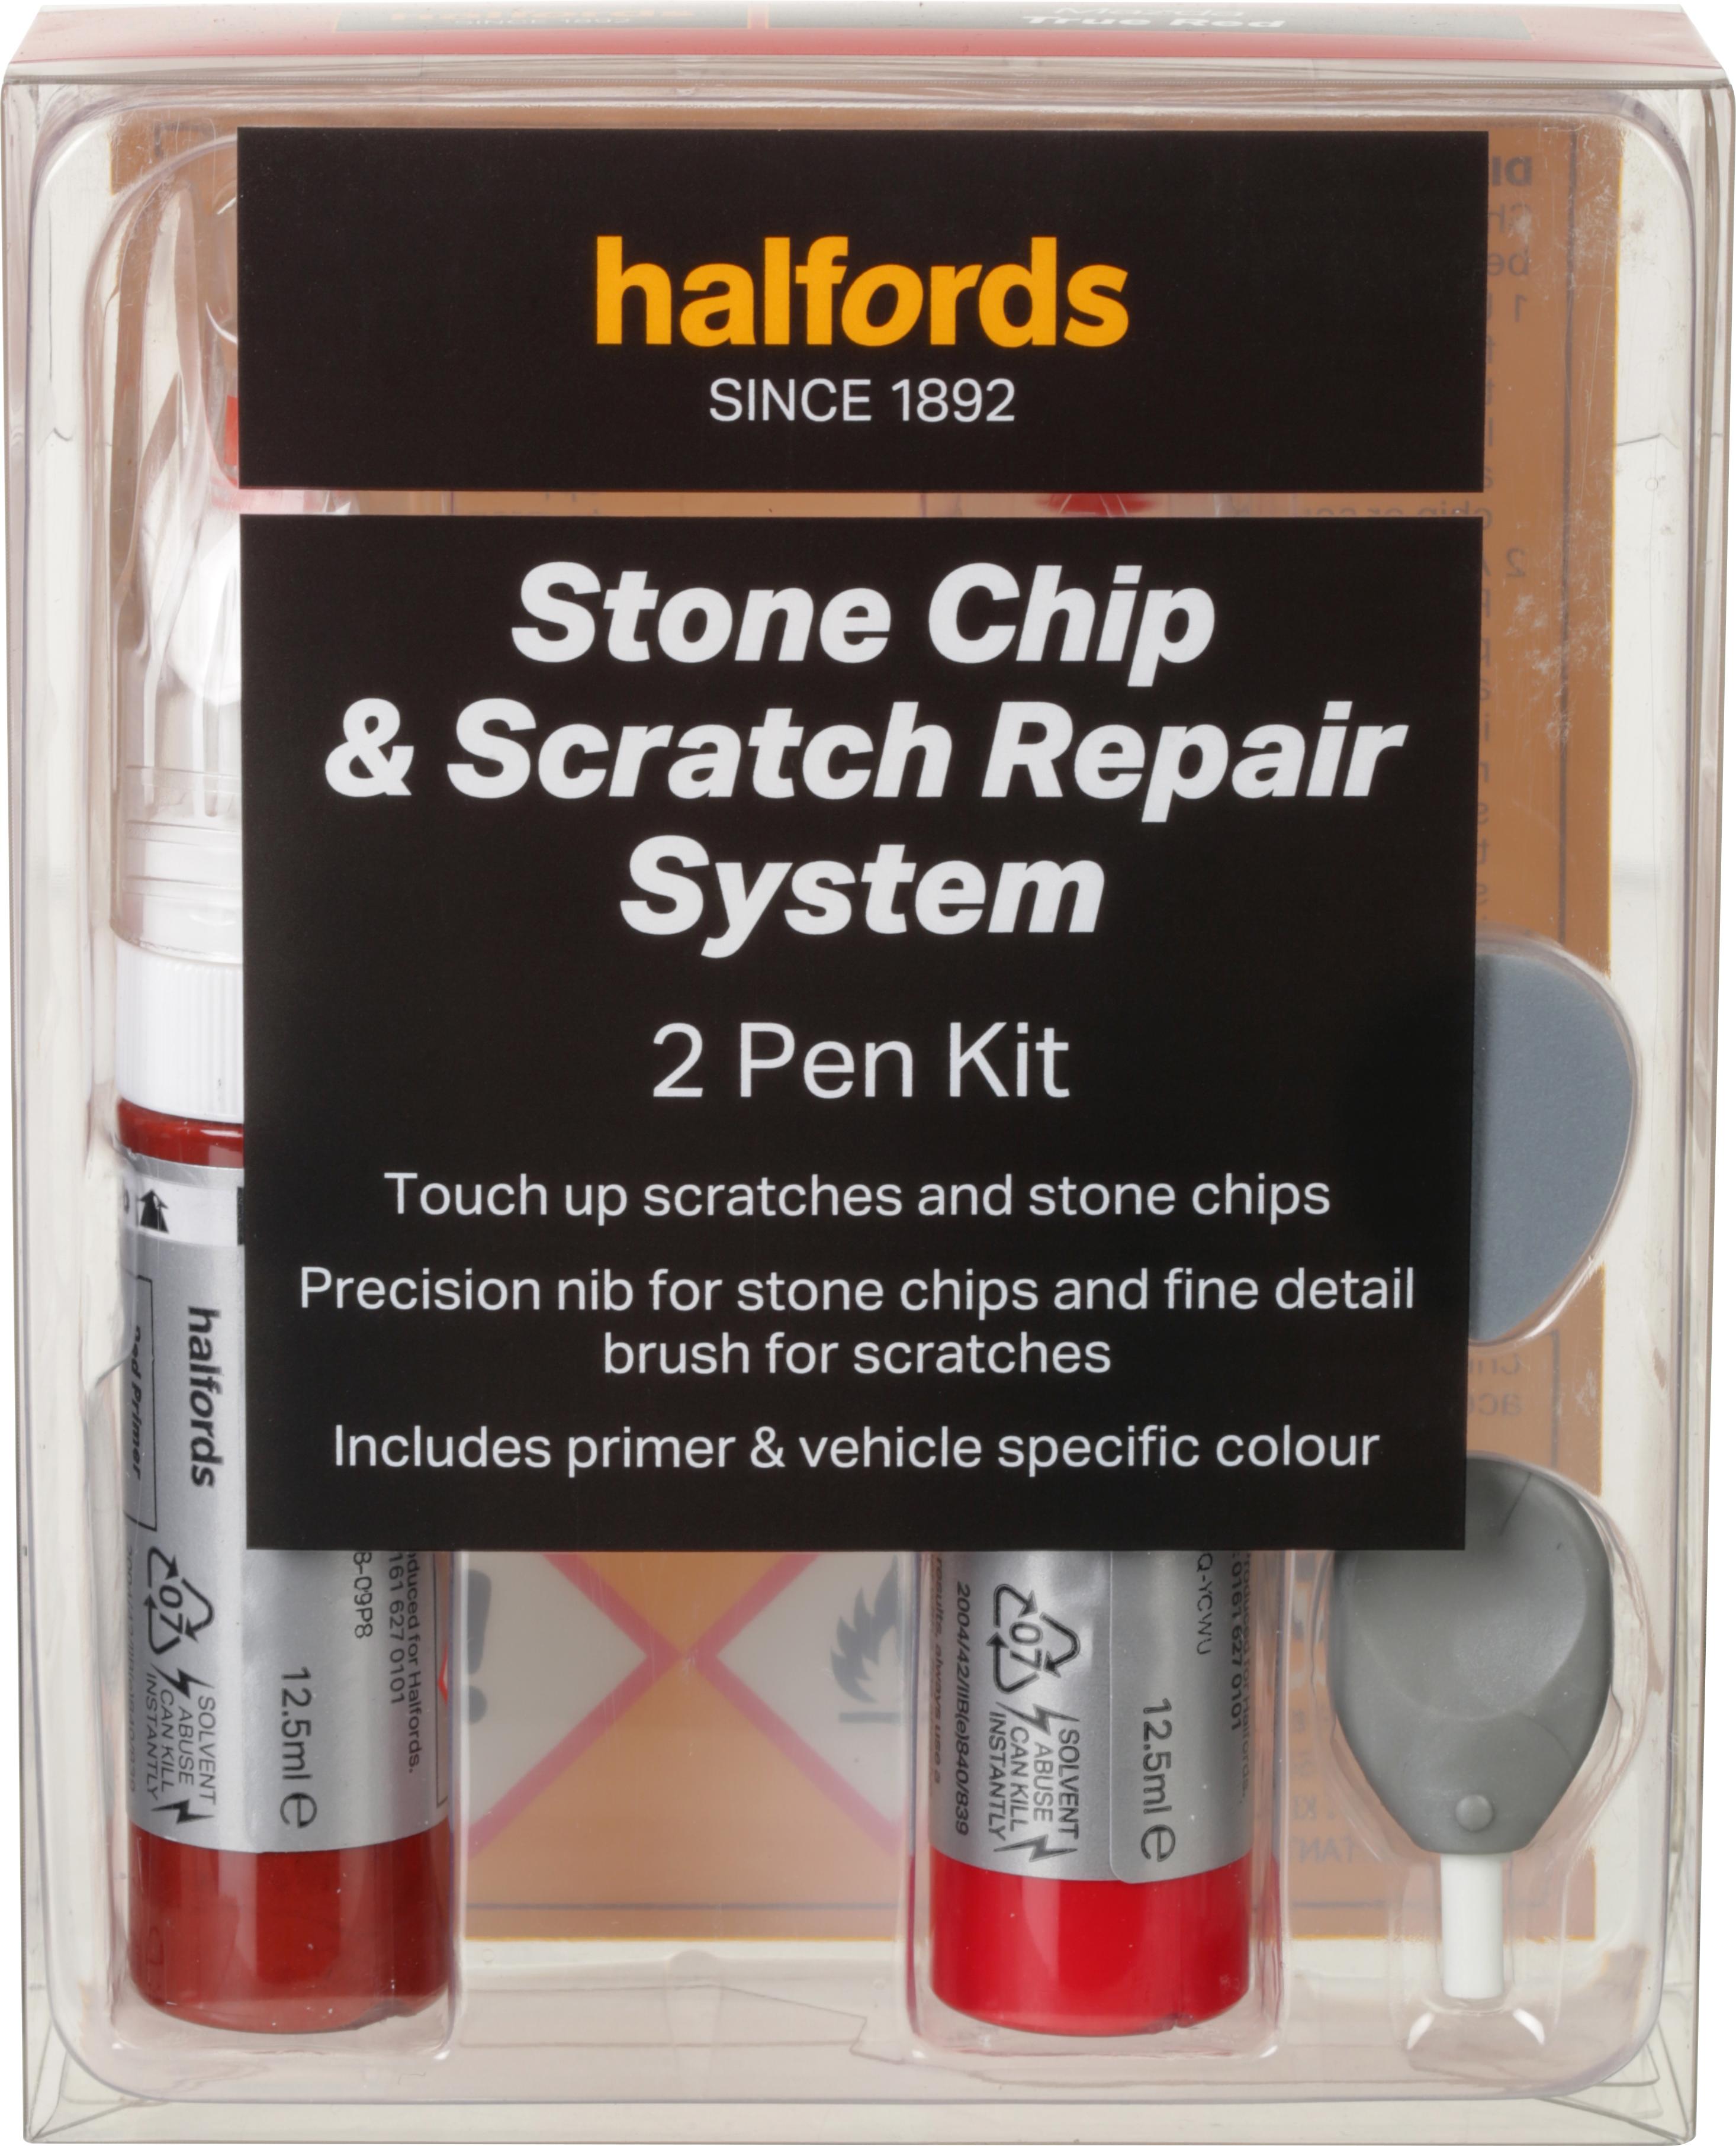 Halfords Mazda True Red Scratch & Chip Repair Kit